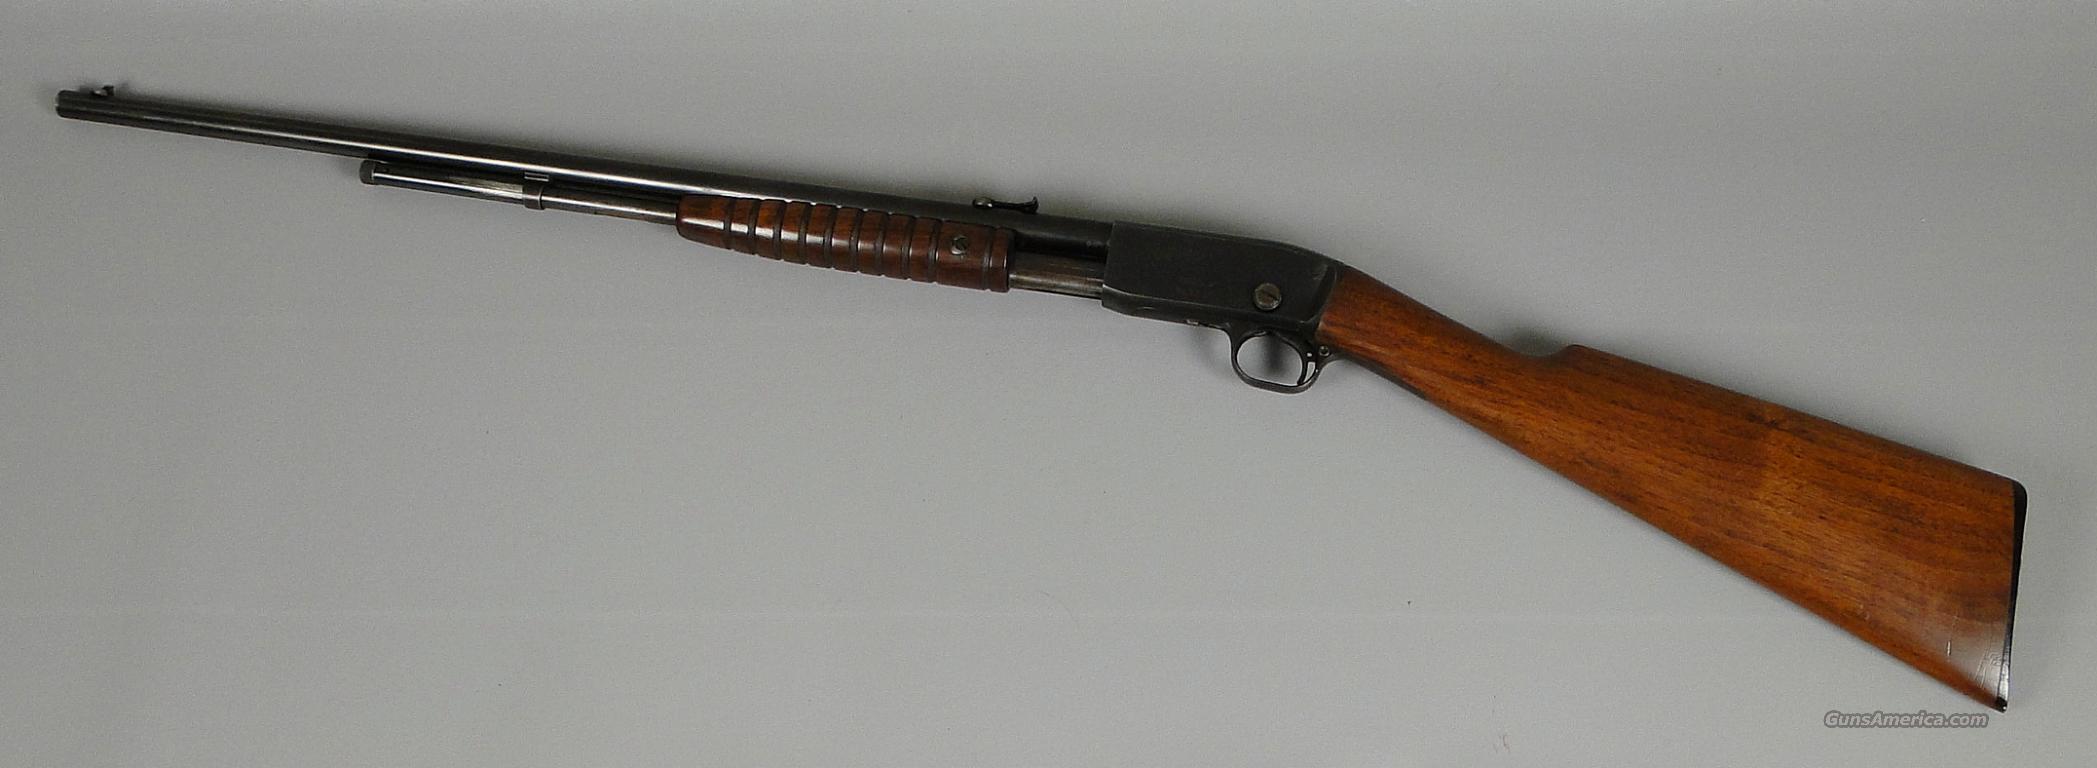 remington model 12 rifle serial numbers